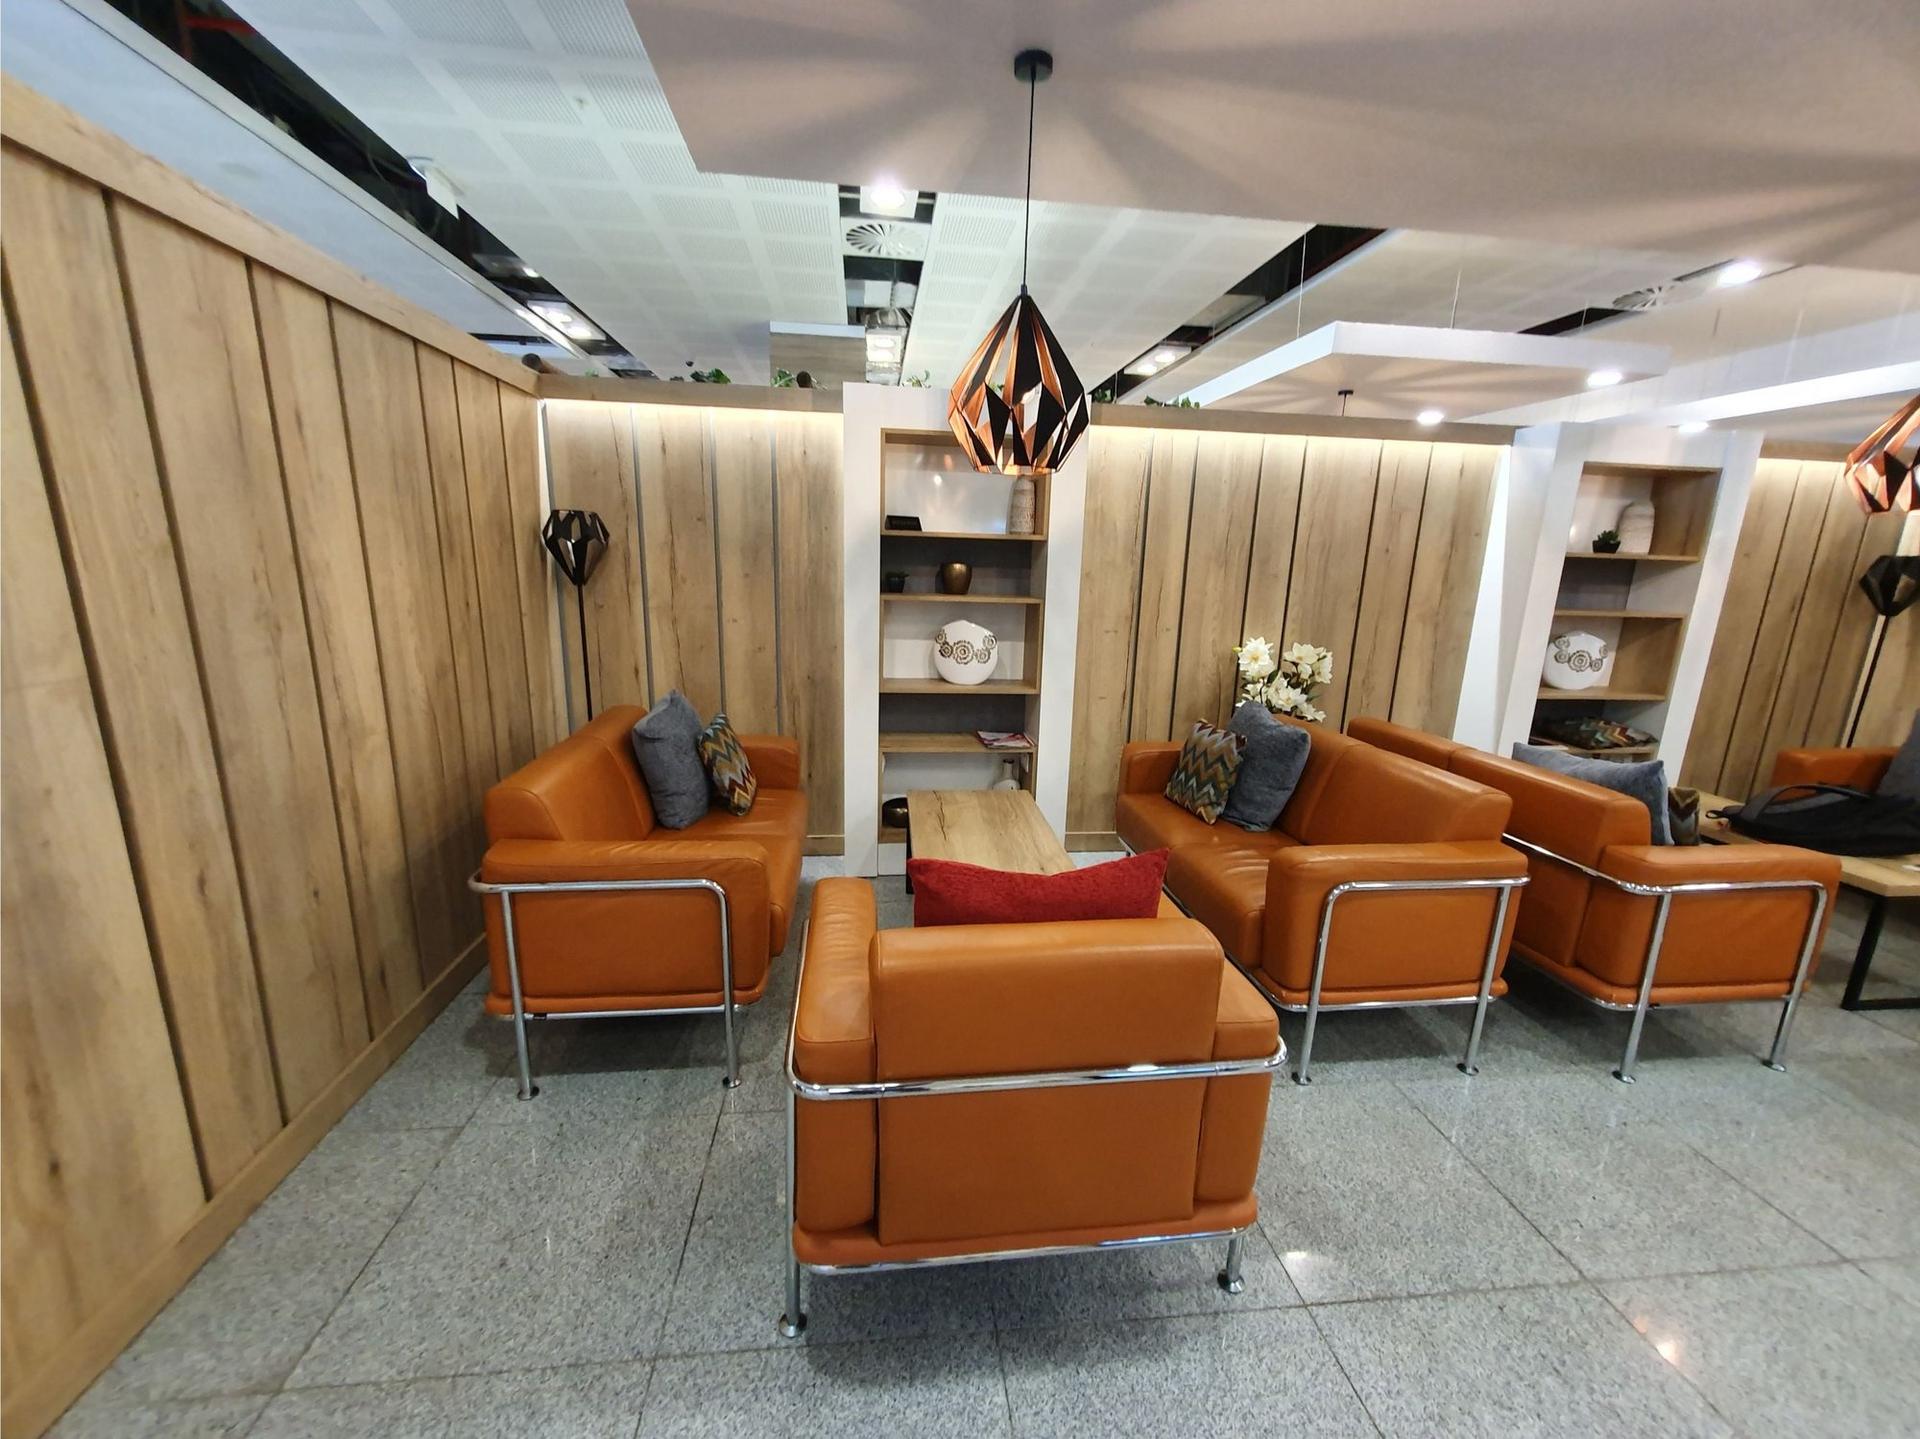 Burgas Airport Lounge image 18 of 43